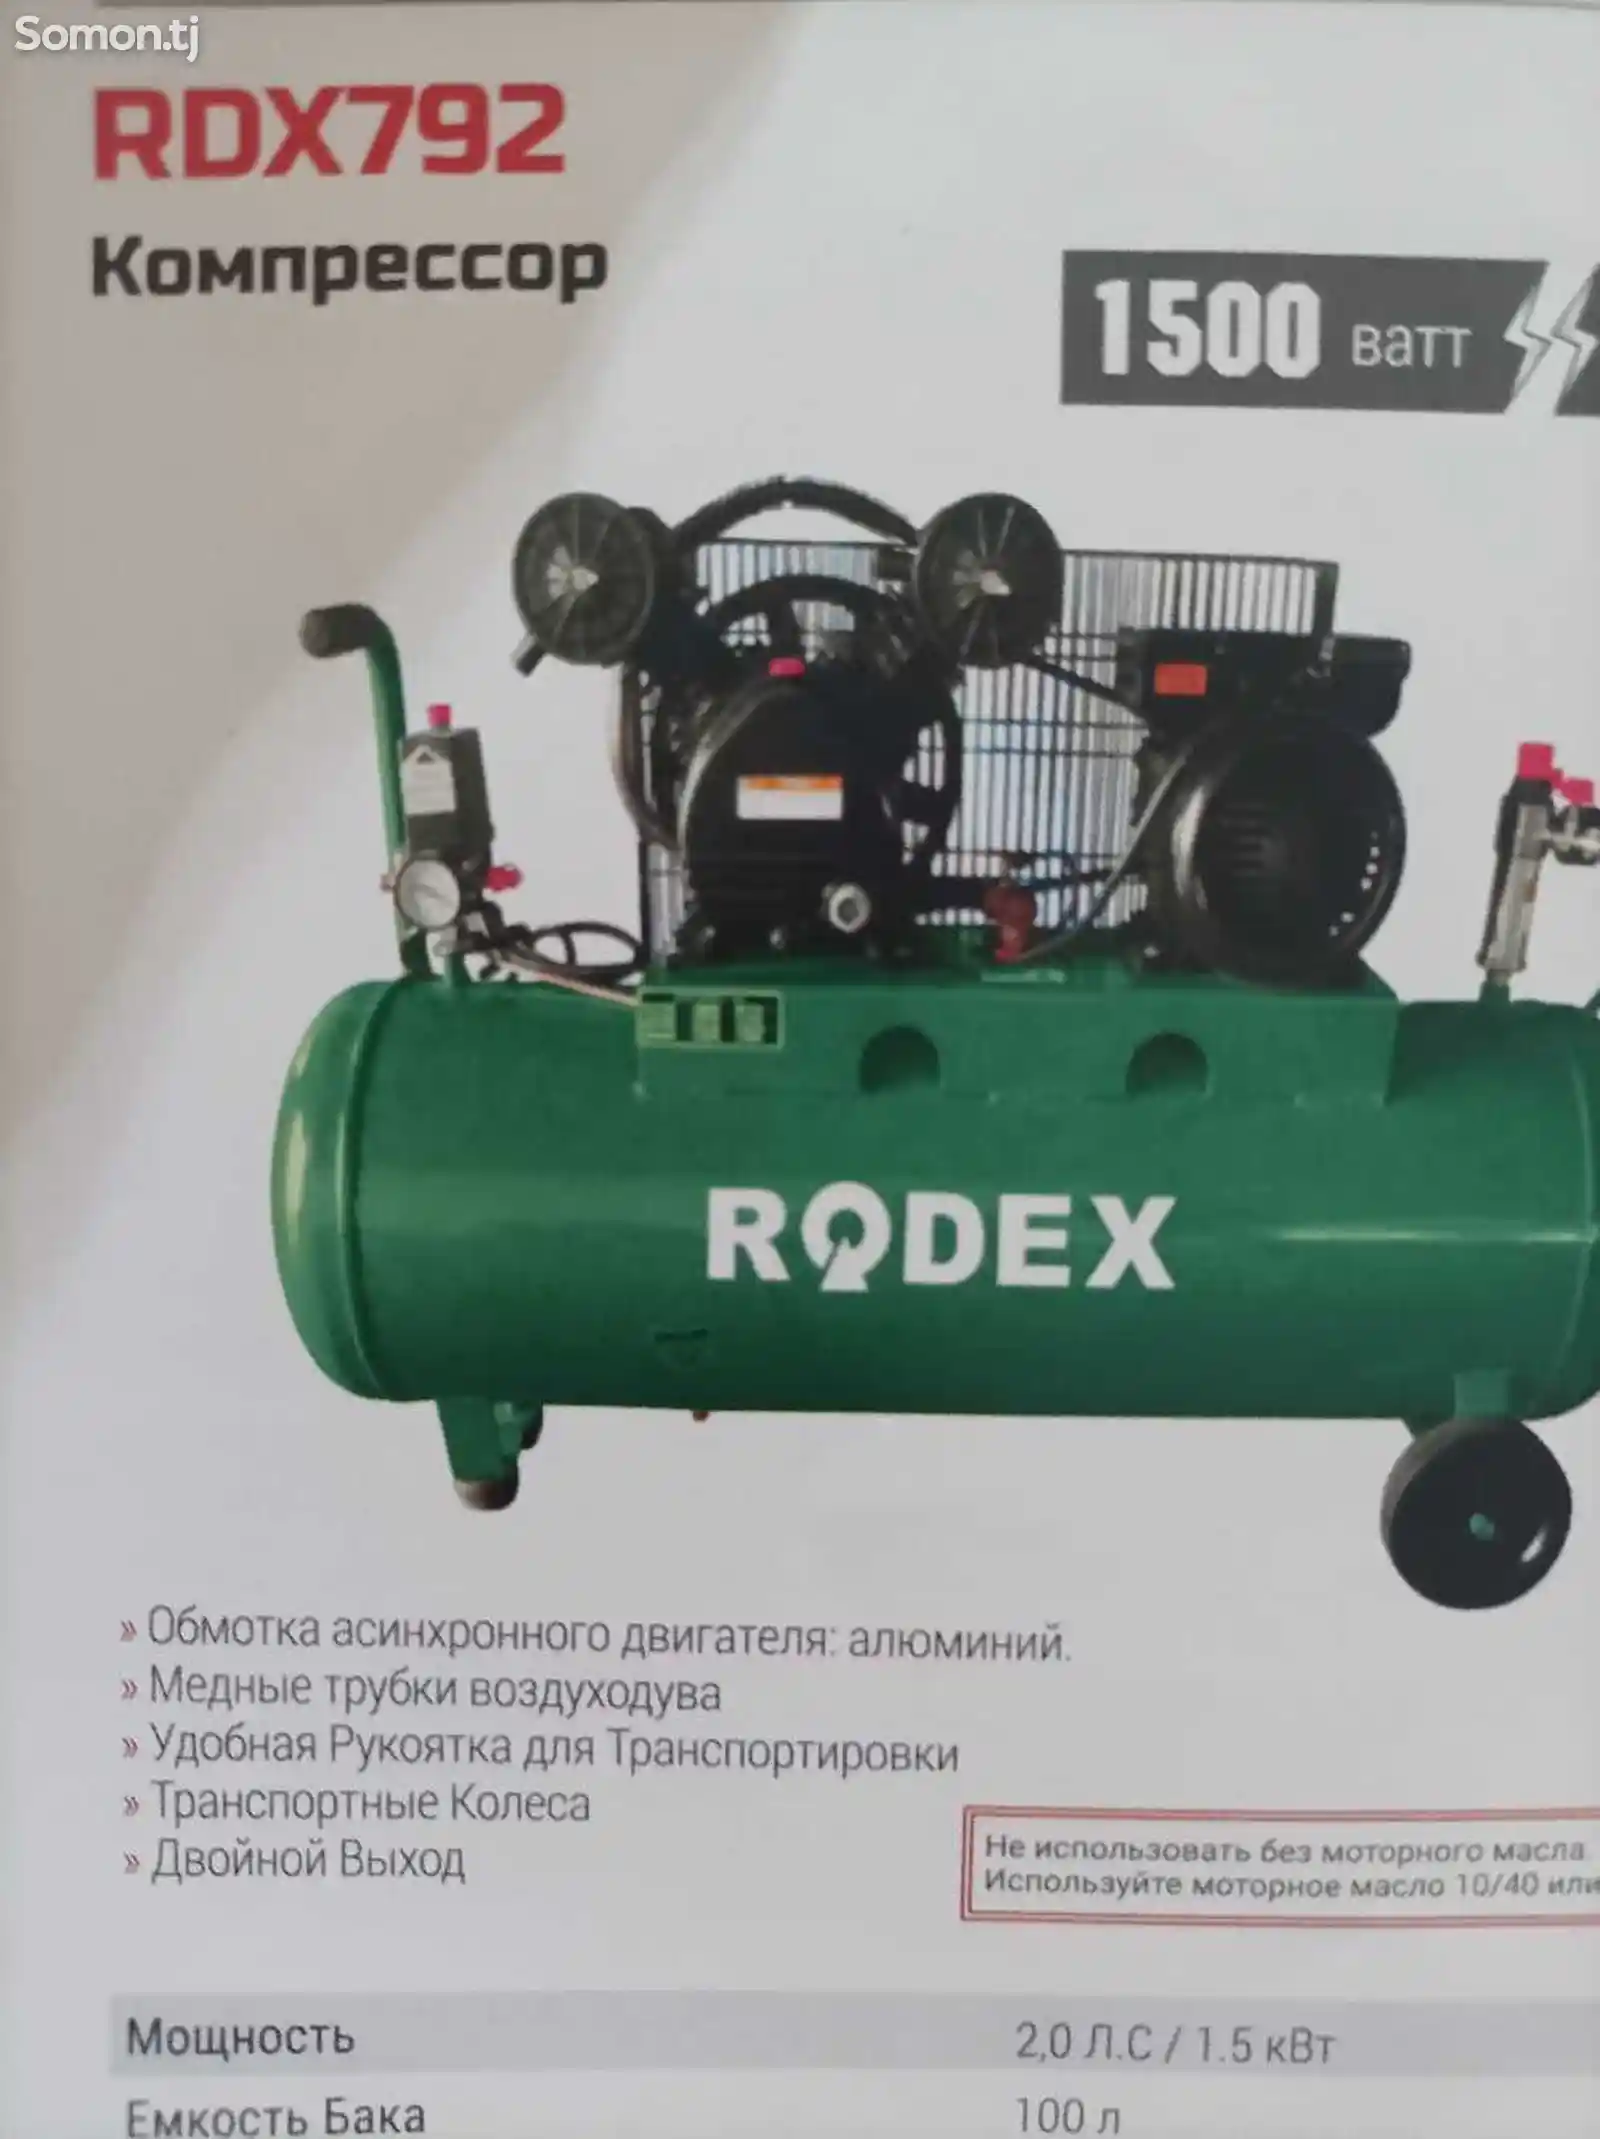 Компрессор RDX790